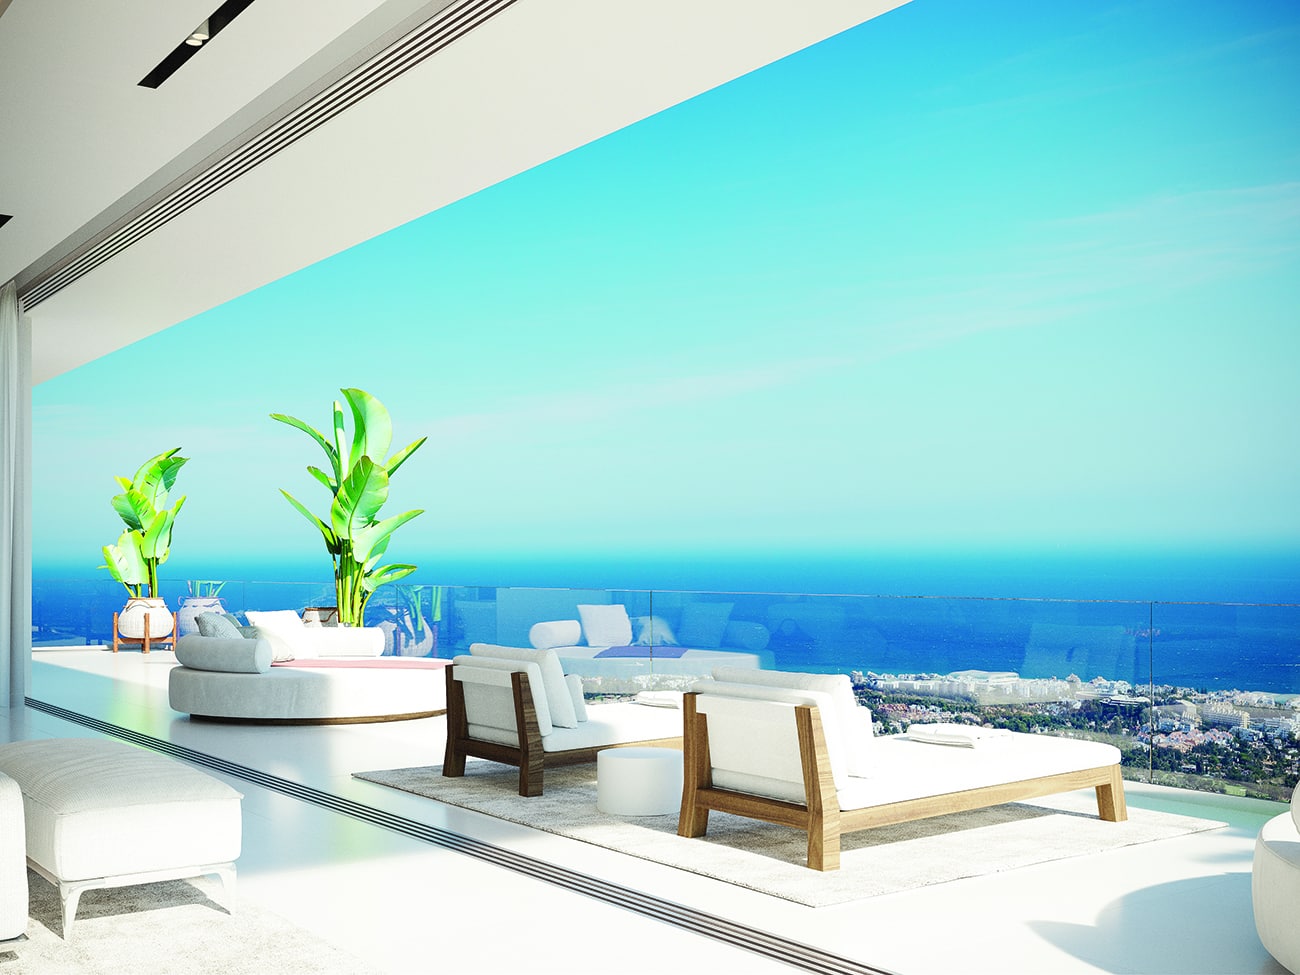 The master bedroom terrace enjoys fabulous views over the Mediterranean